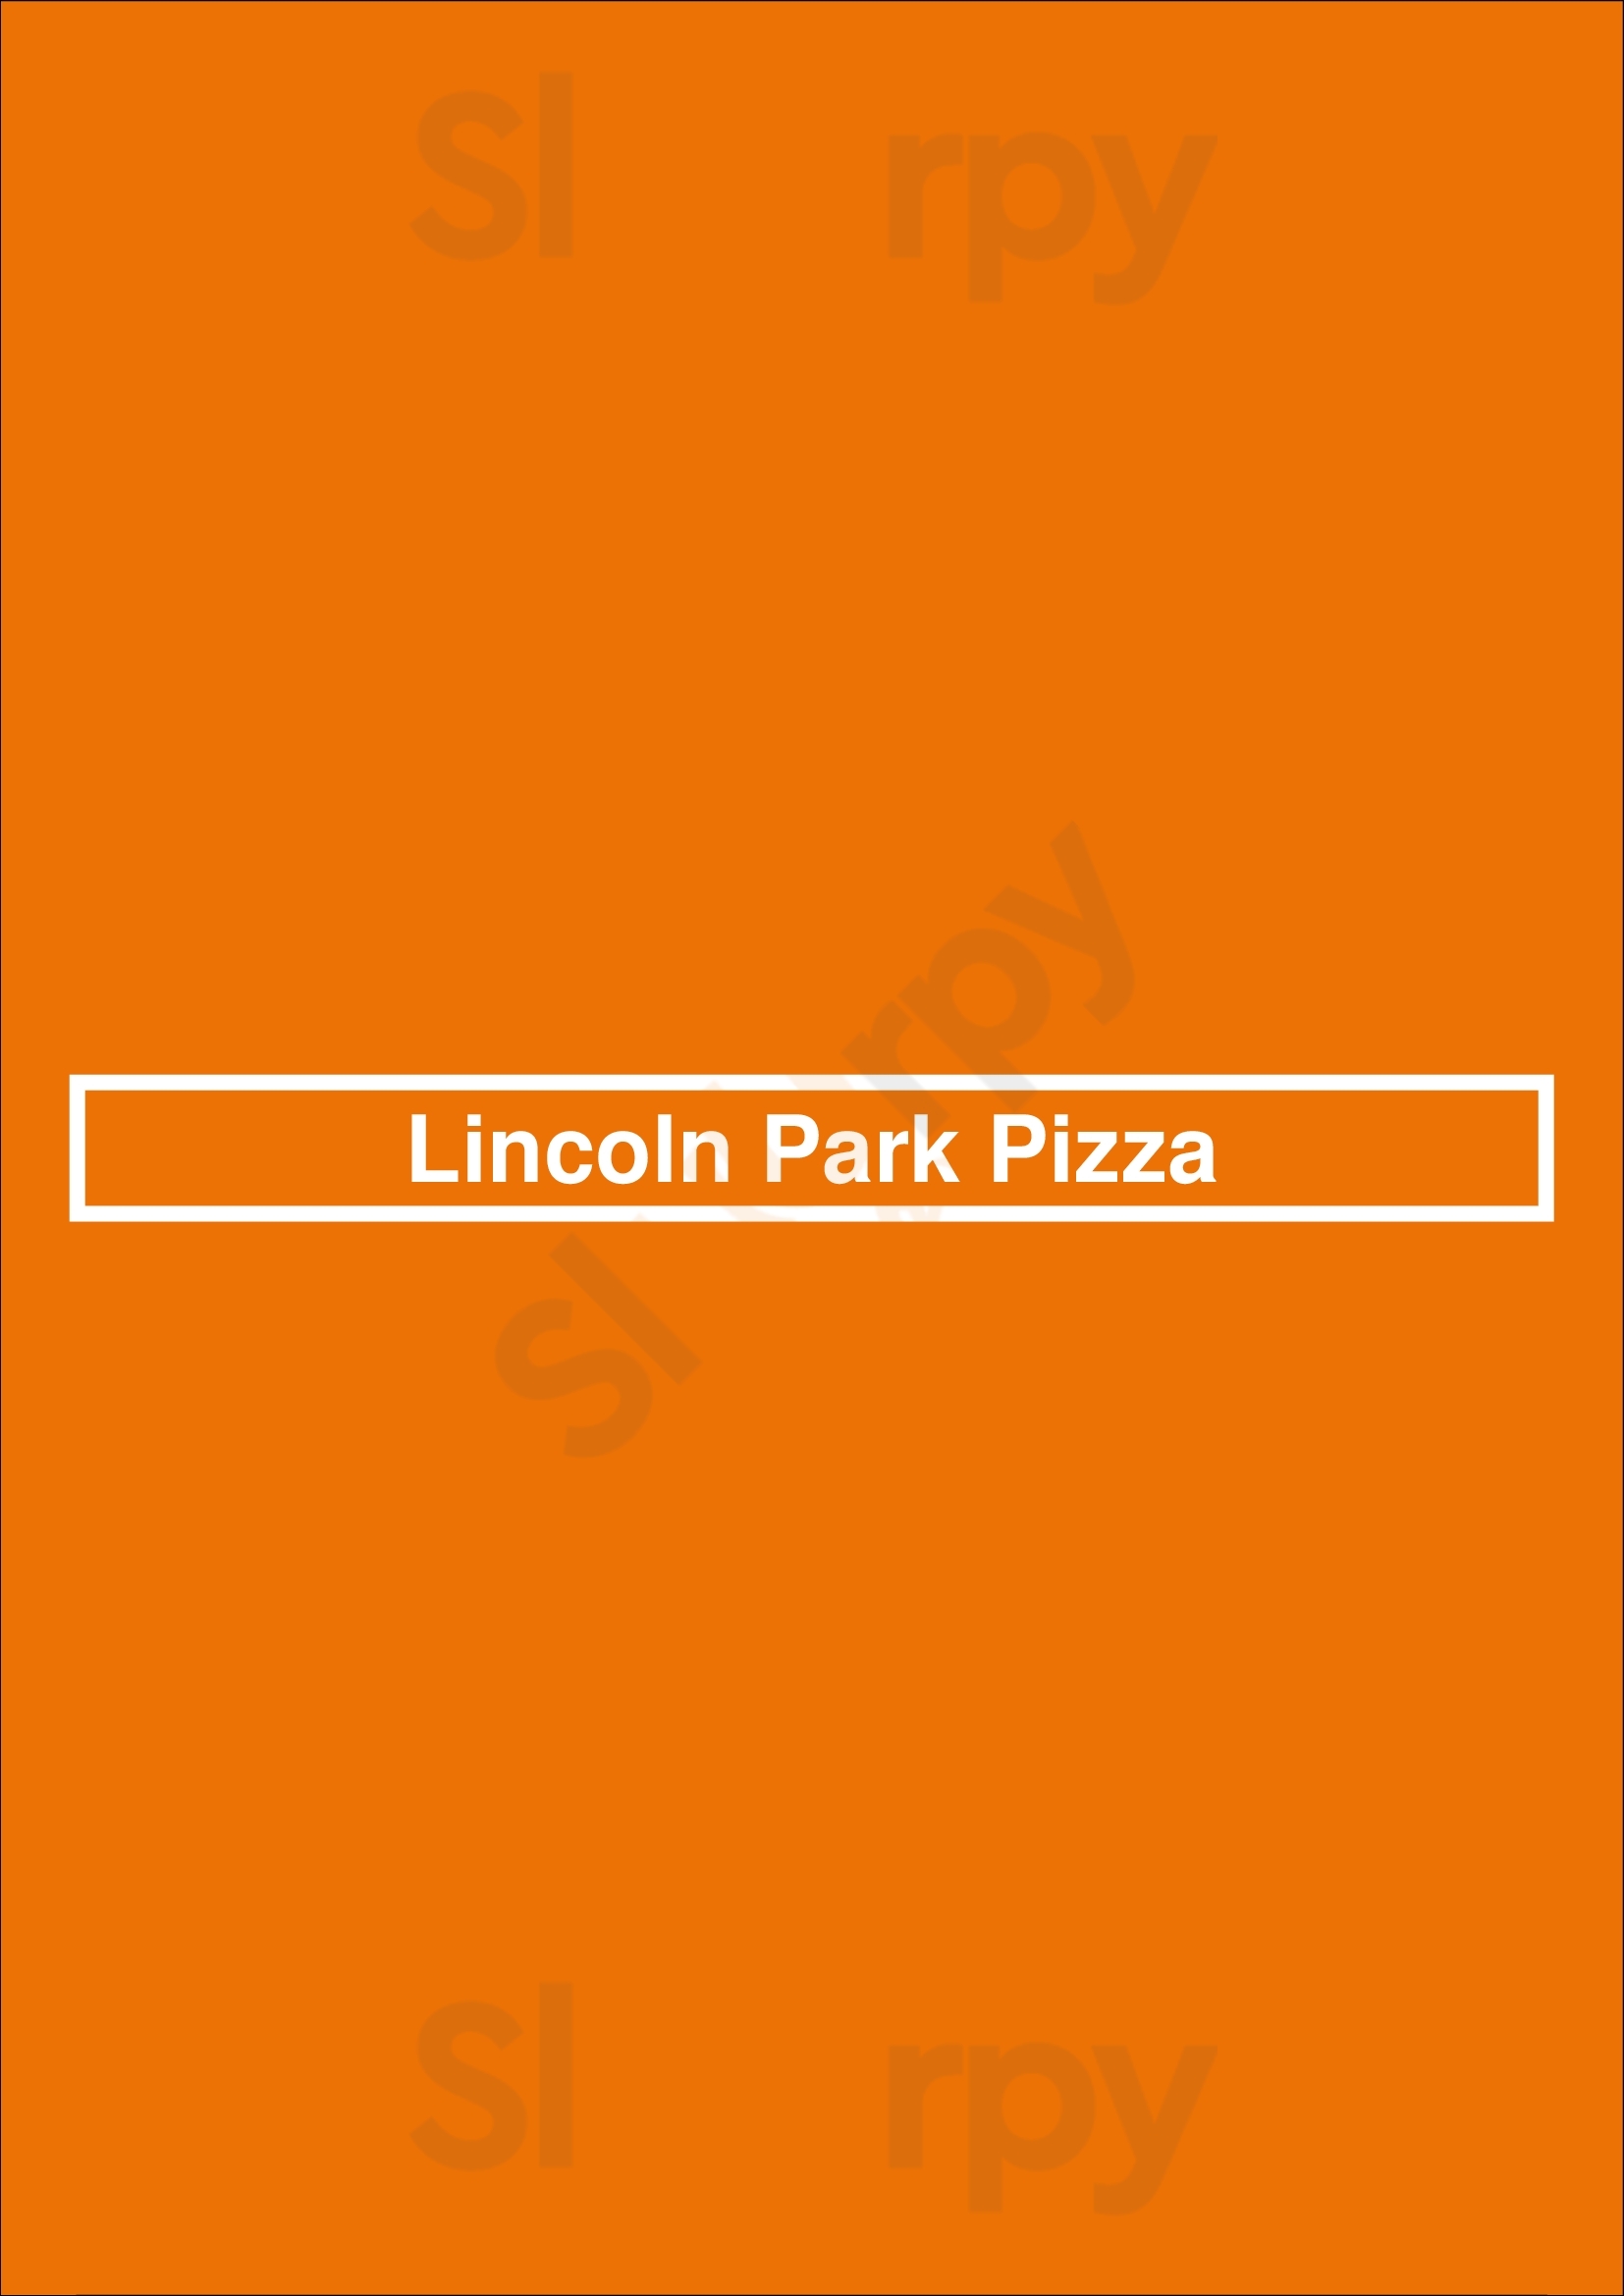 Lincoln Park Pizza Chicago Menu - 1